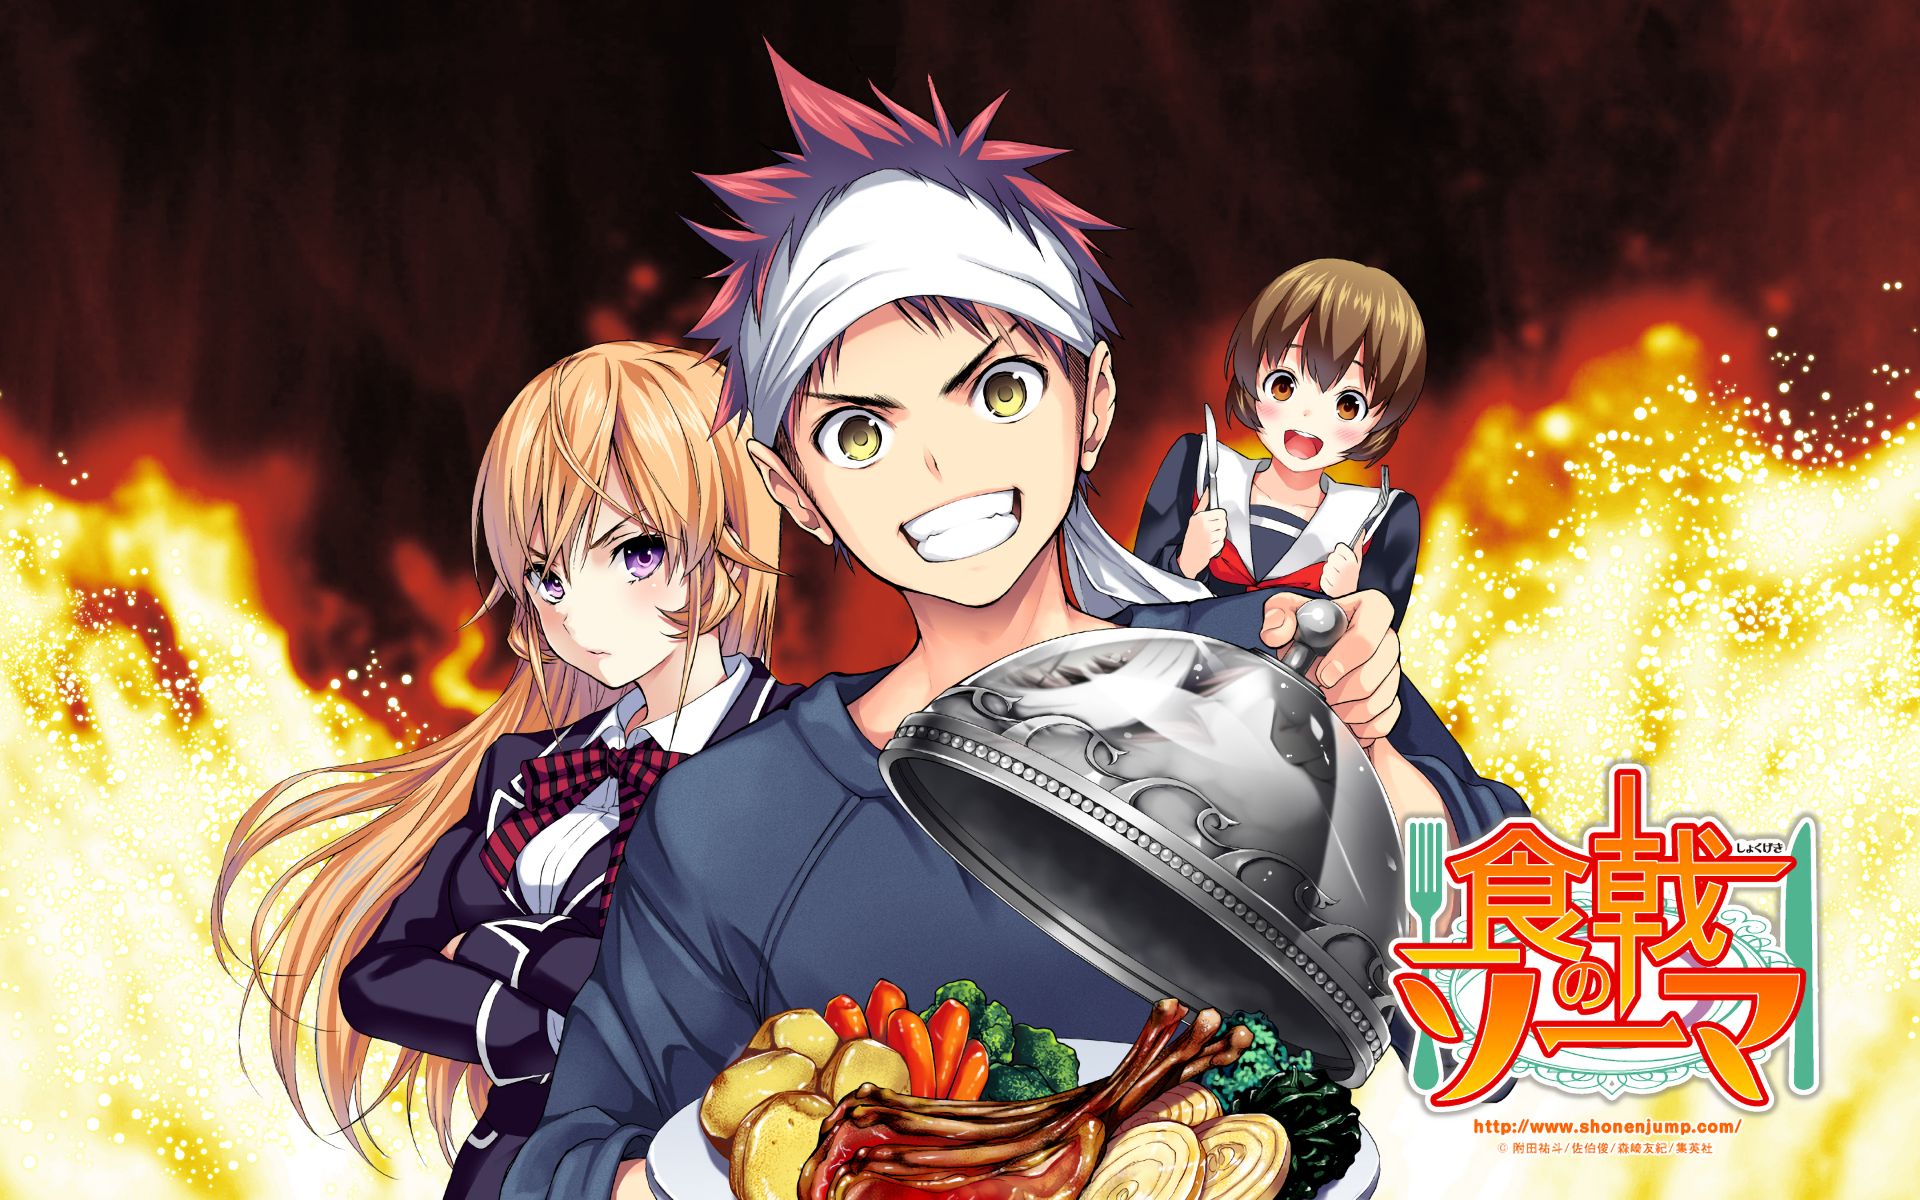 FOOD WARS Omelette Souffle 食戟のソーマ  top anime food  fast omelette cooking   Shokugeki No Souma  YouTube